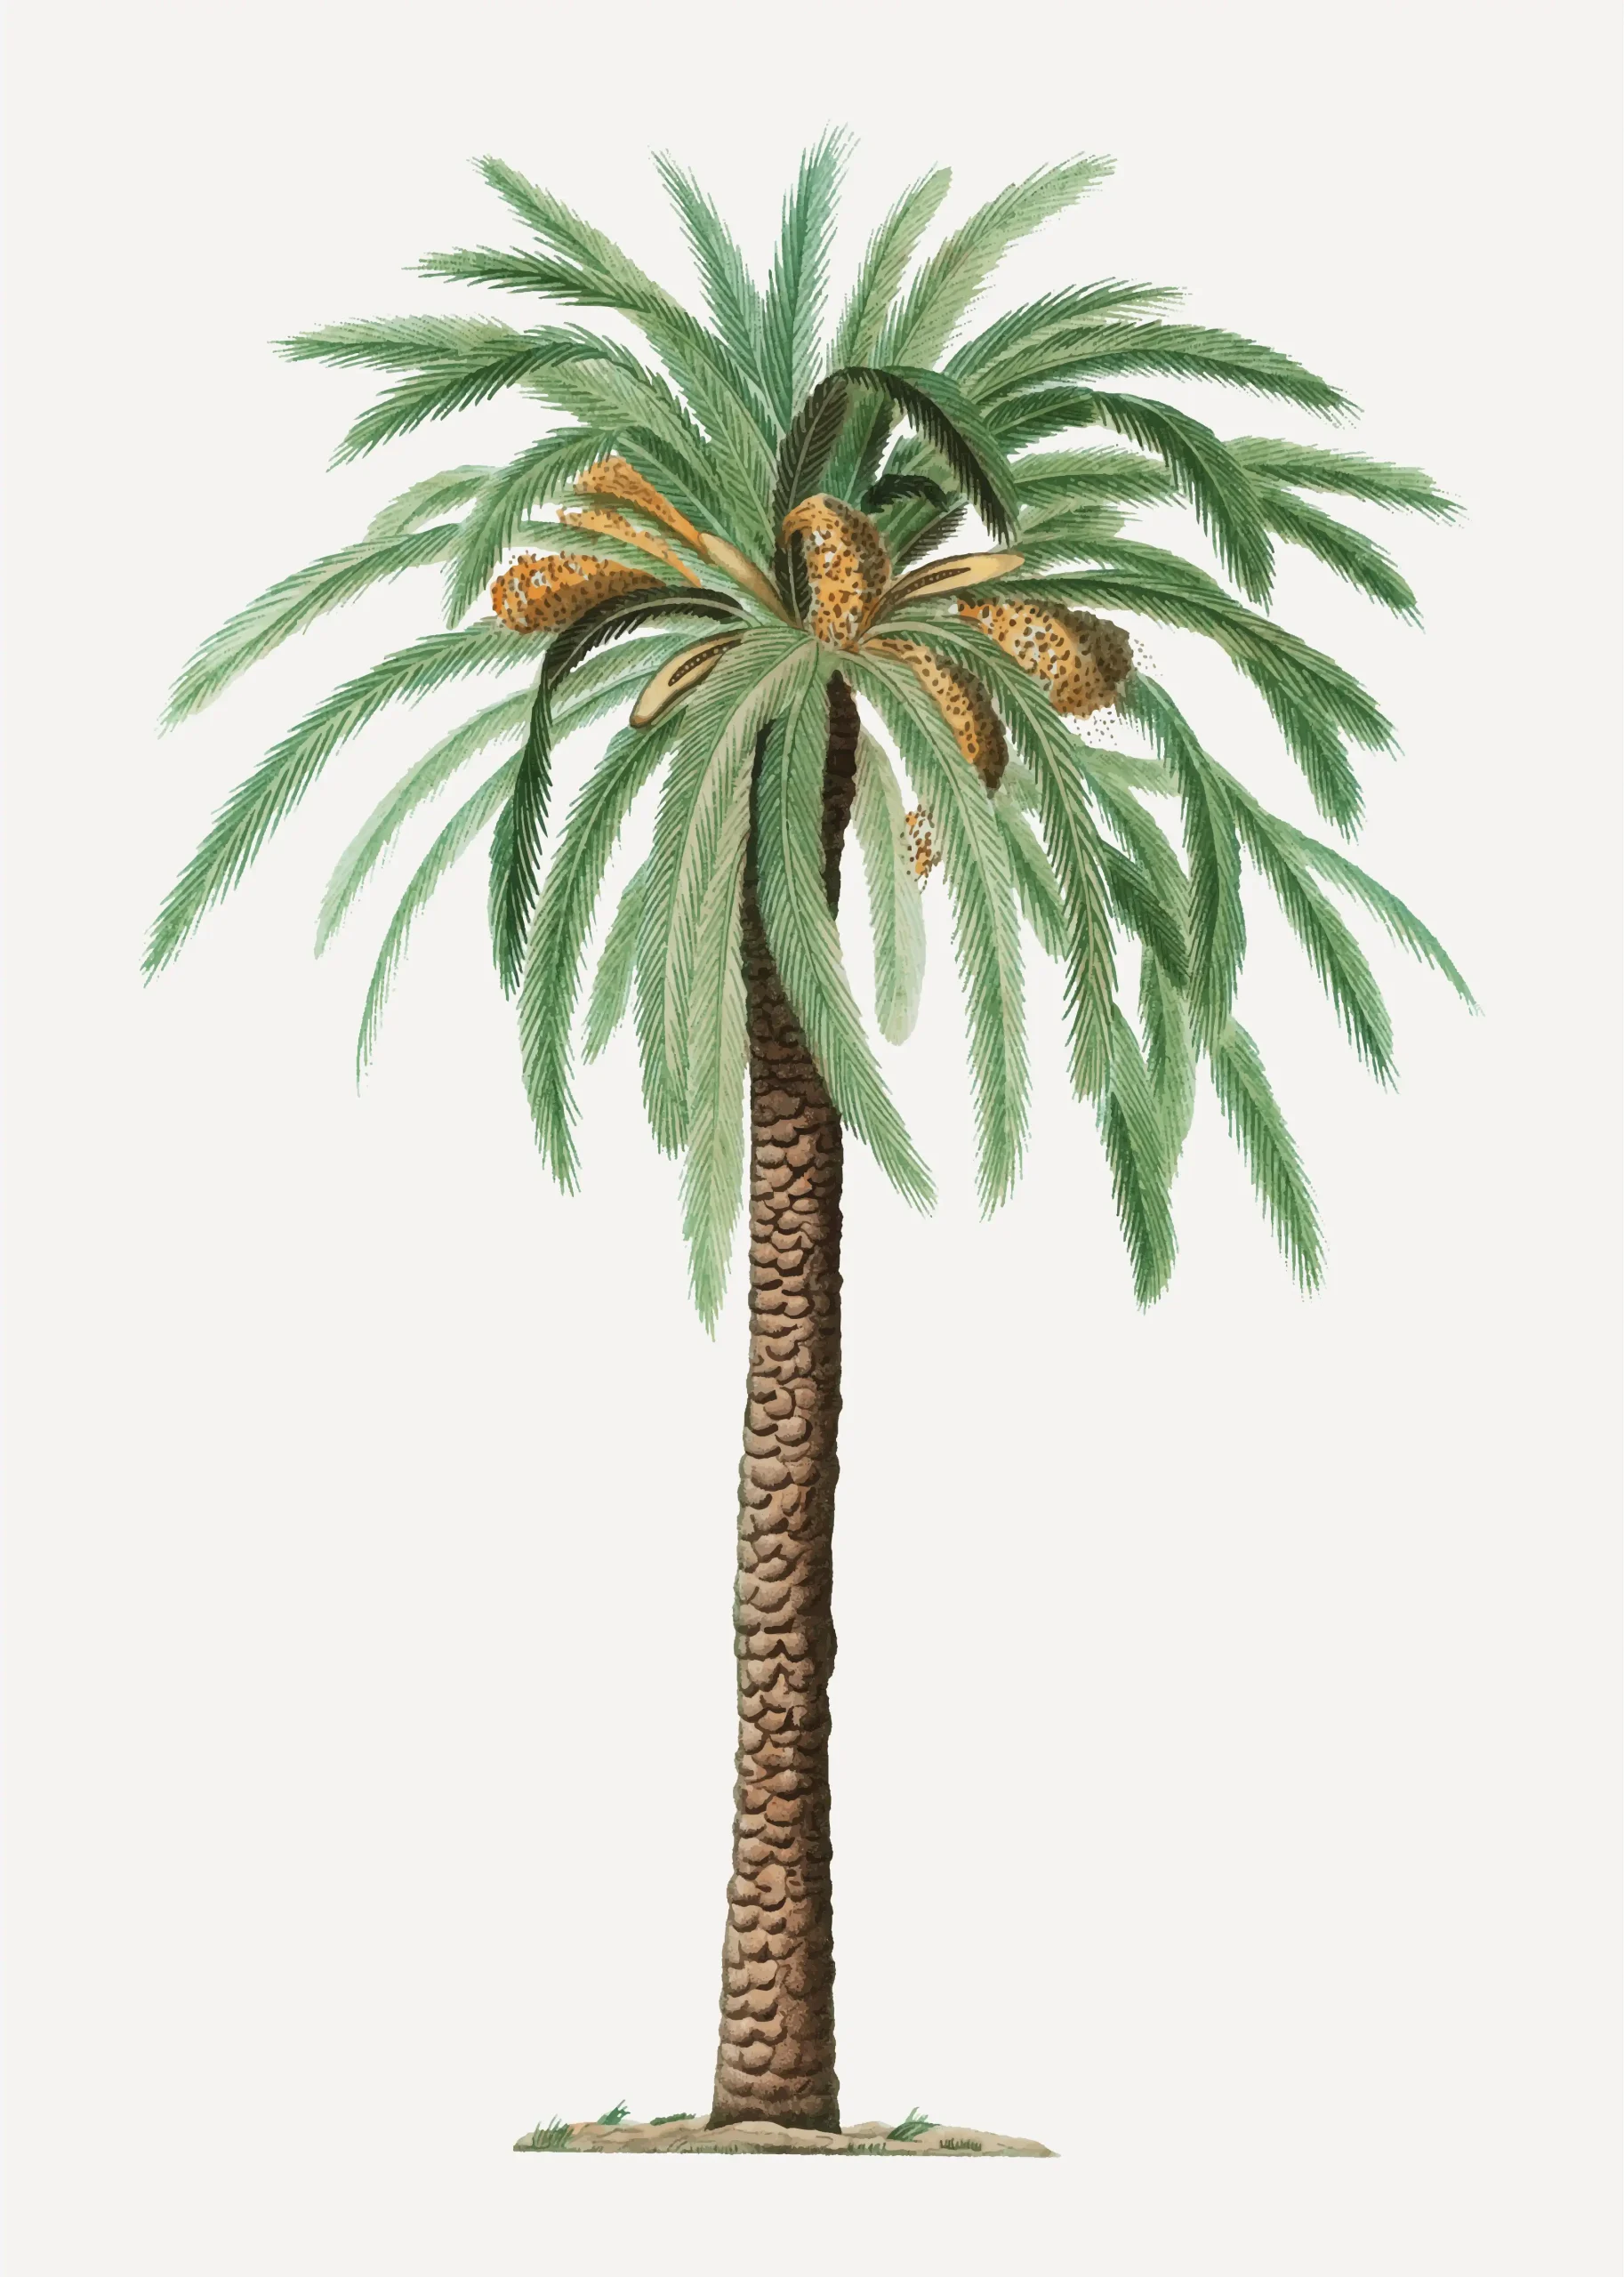 Ornamental palm